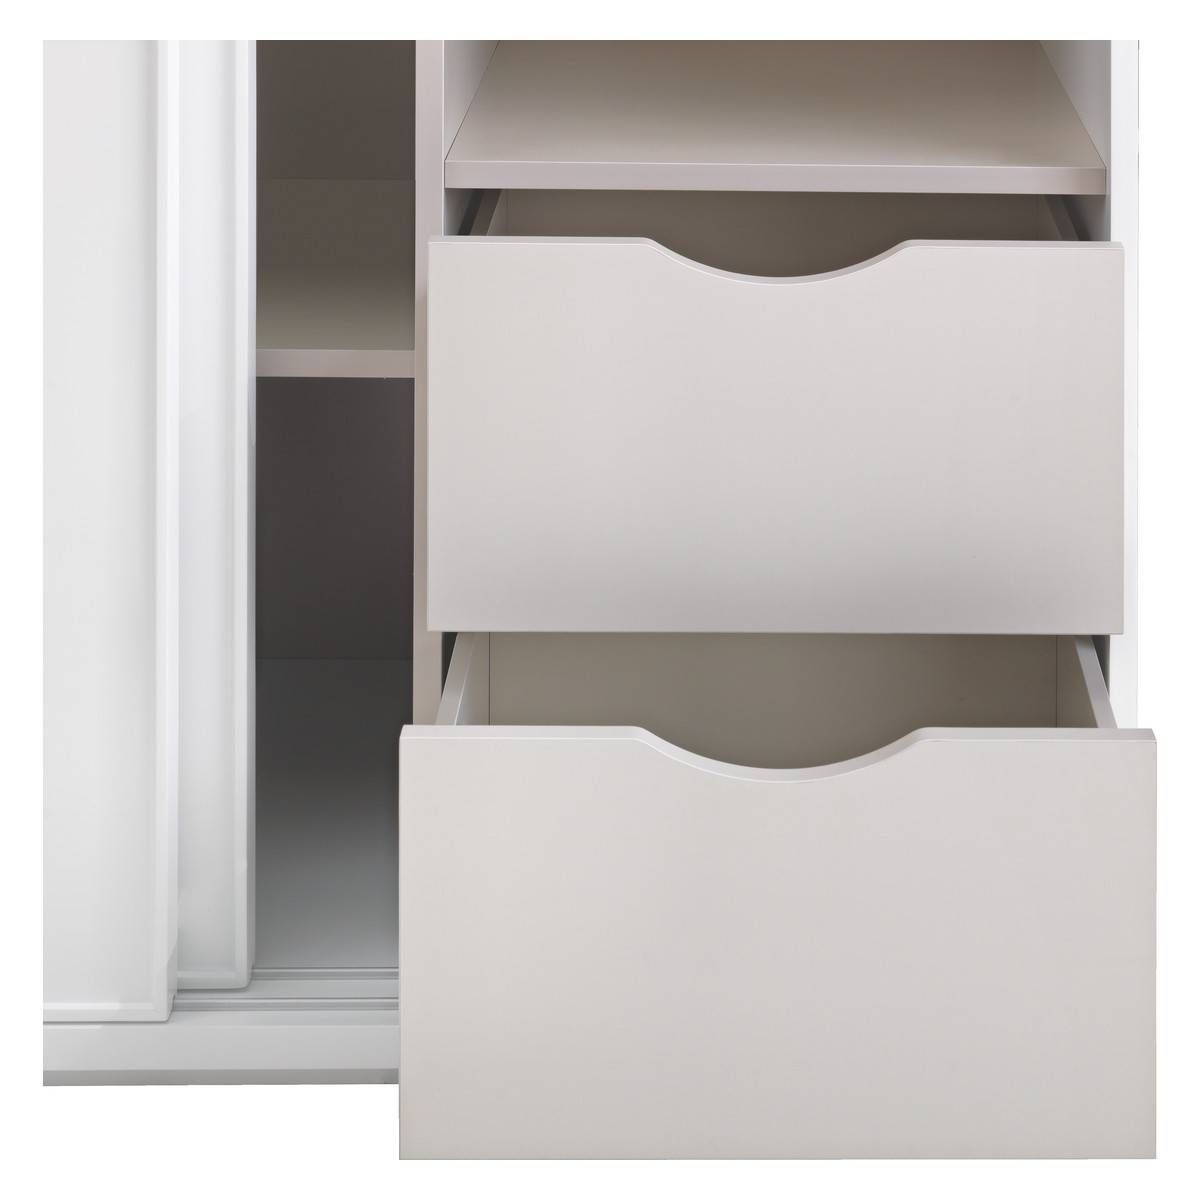 Siena White 2 Door Sliding Wardrobe | Buy Now At Habitat Uk Inside 2 Door Wardrobe With Drawers And Shelves (View 30 of 30)